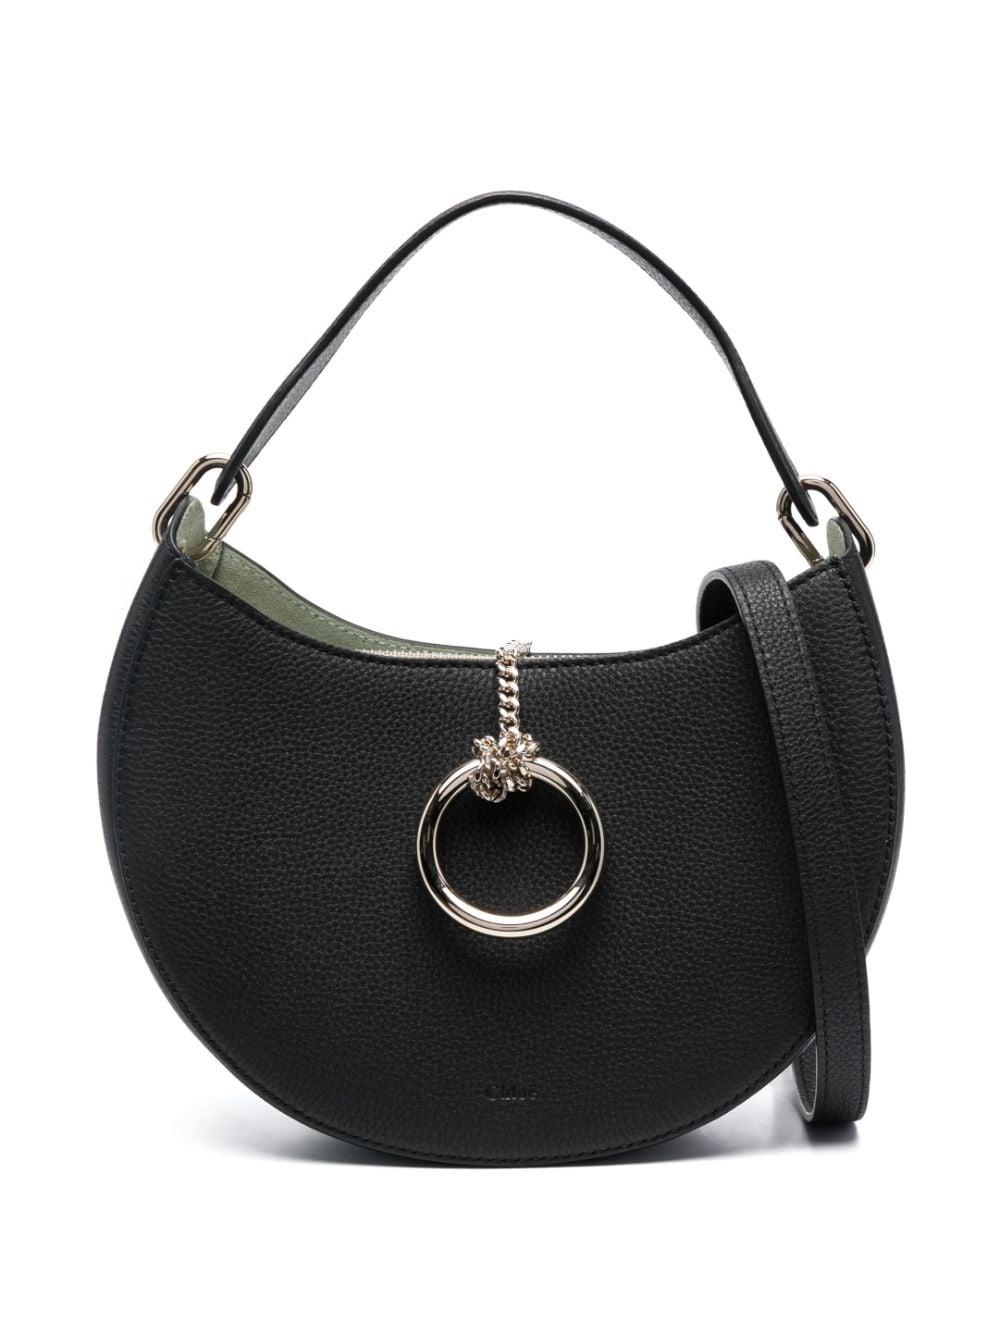 Chloé Arlene Leather Crossbody Bag - Black